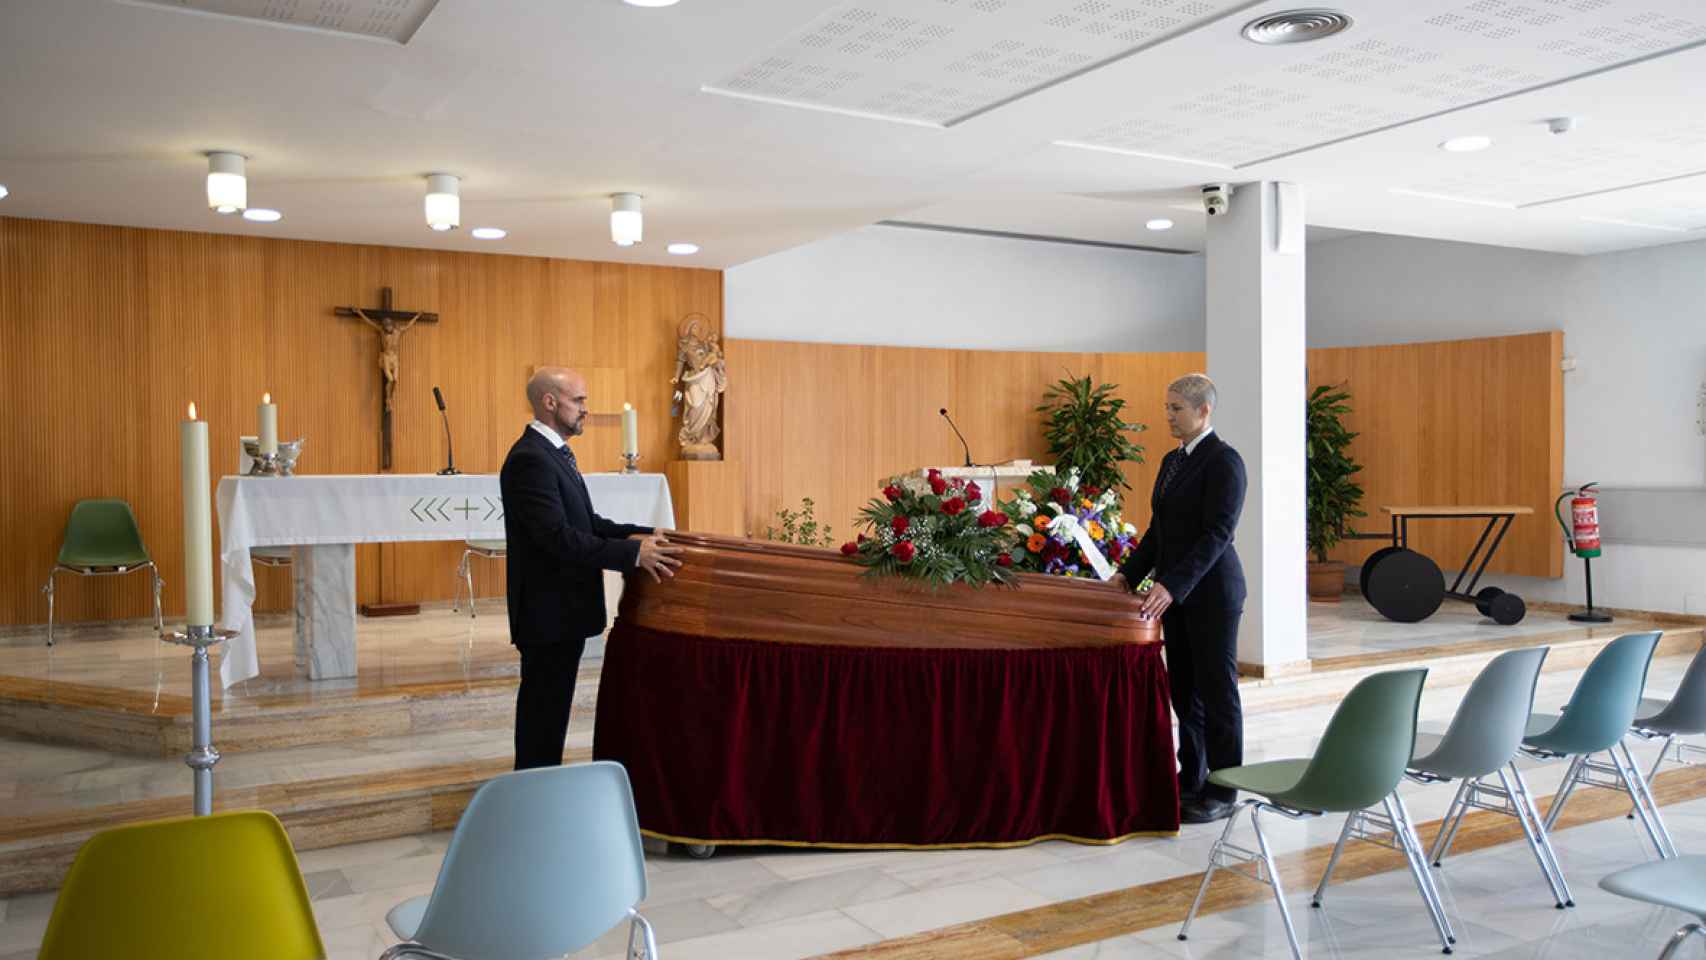 Un funeral promovido por ASV.